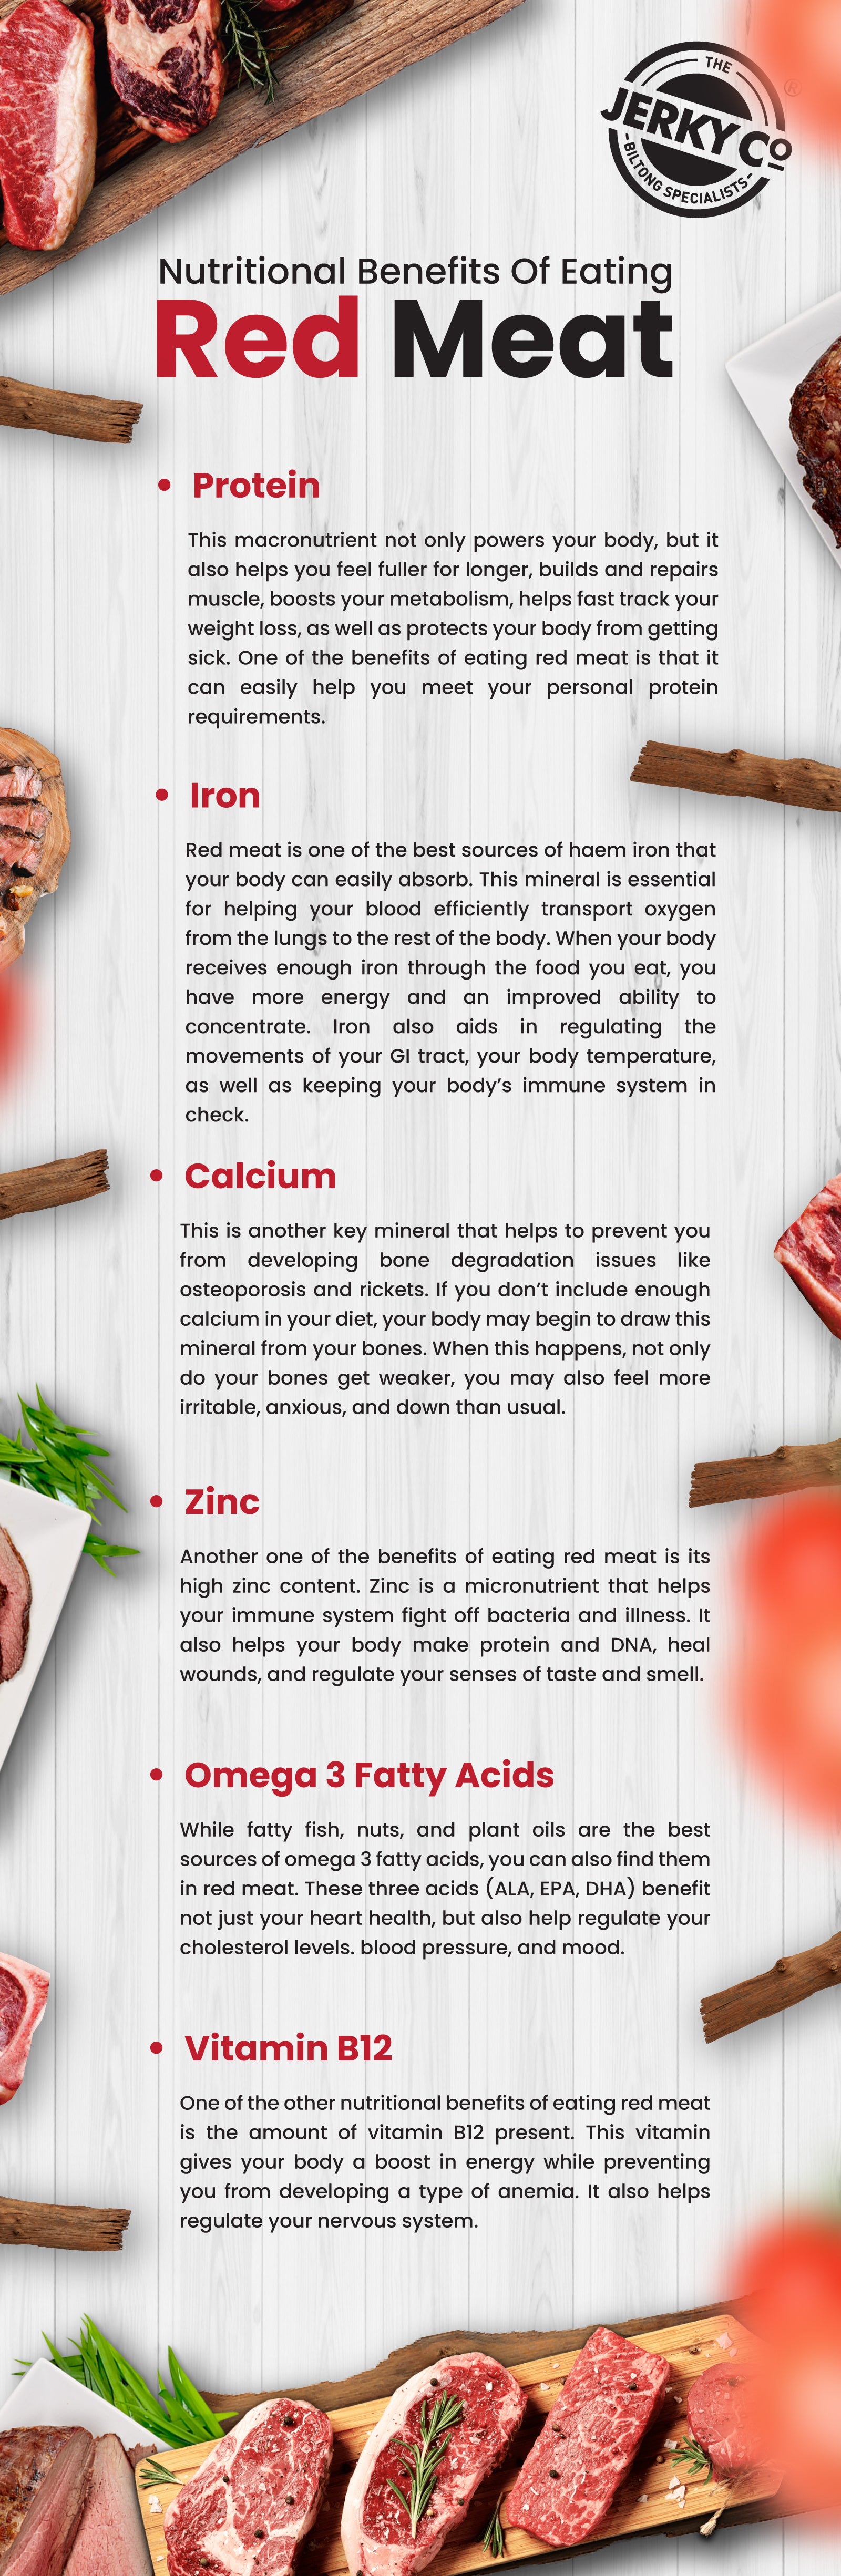 velfærd Fancy kjole få øje på Nutritional Benefits of Red Meat - Infographic | The Jerky Co